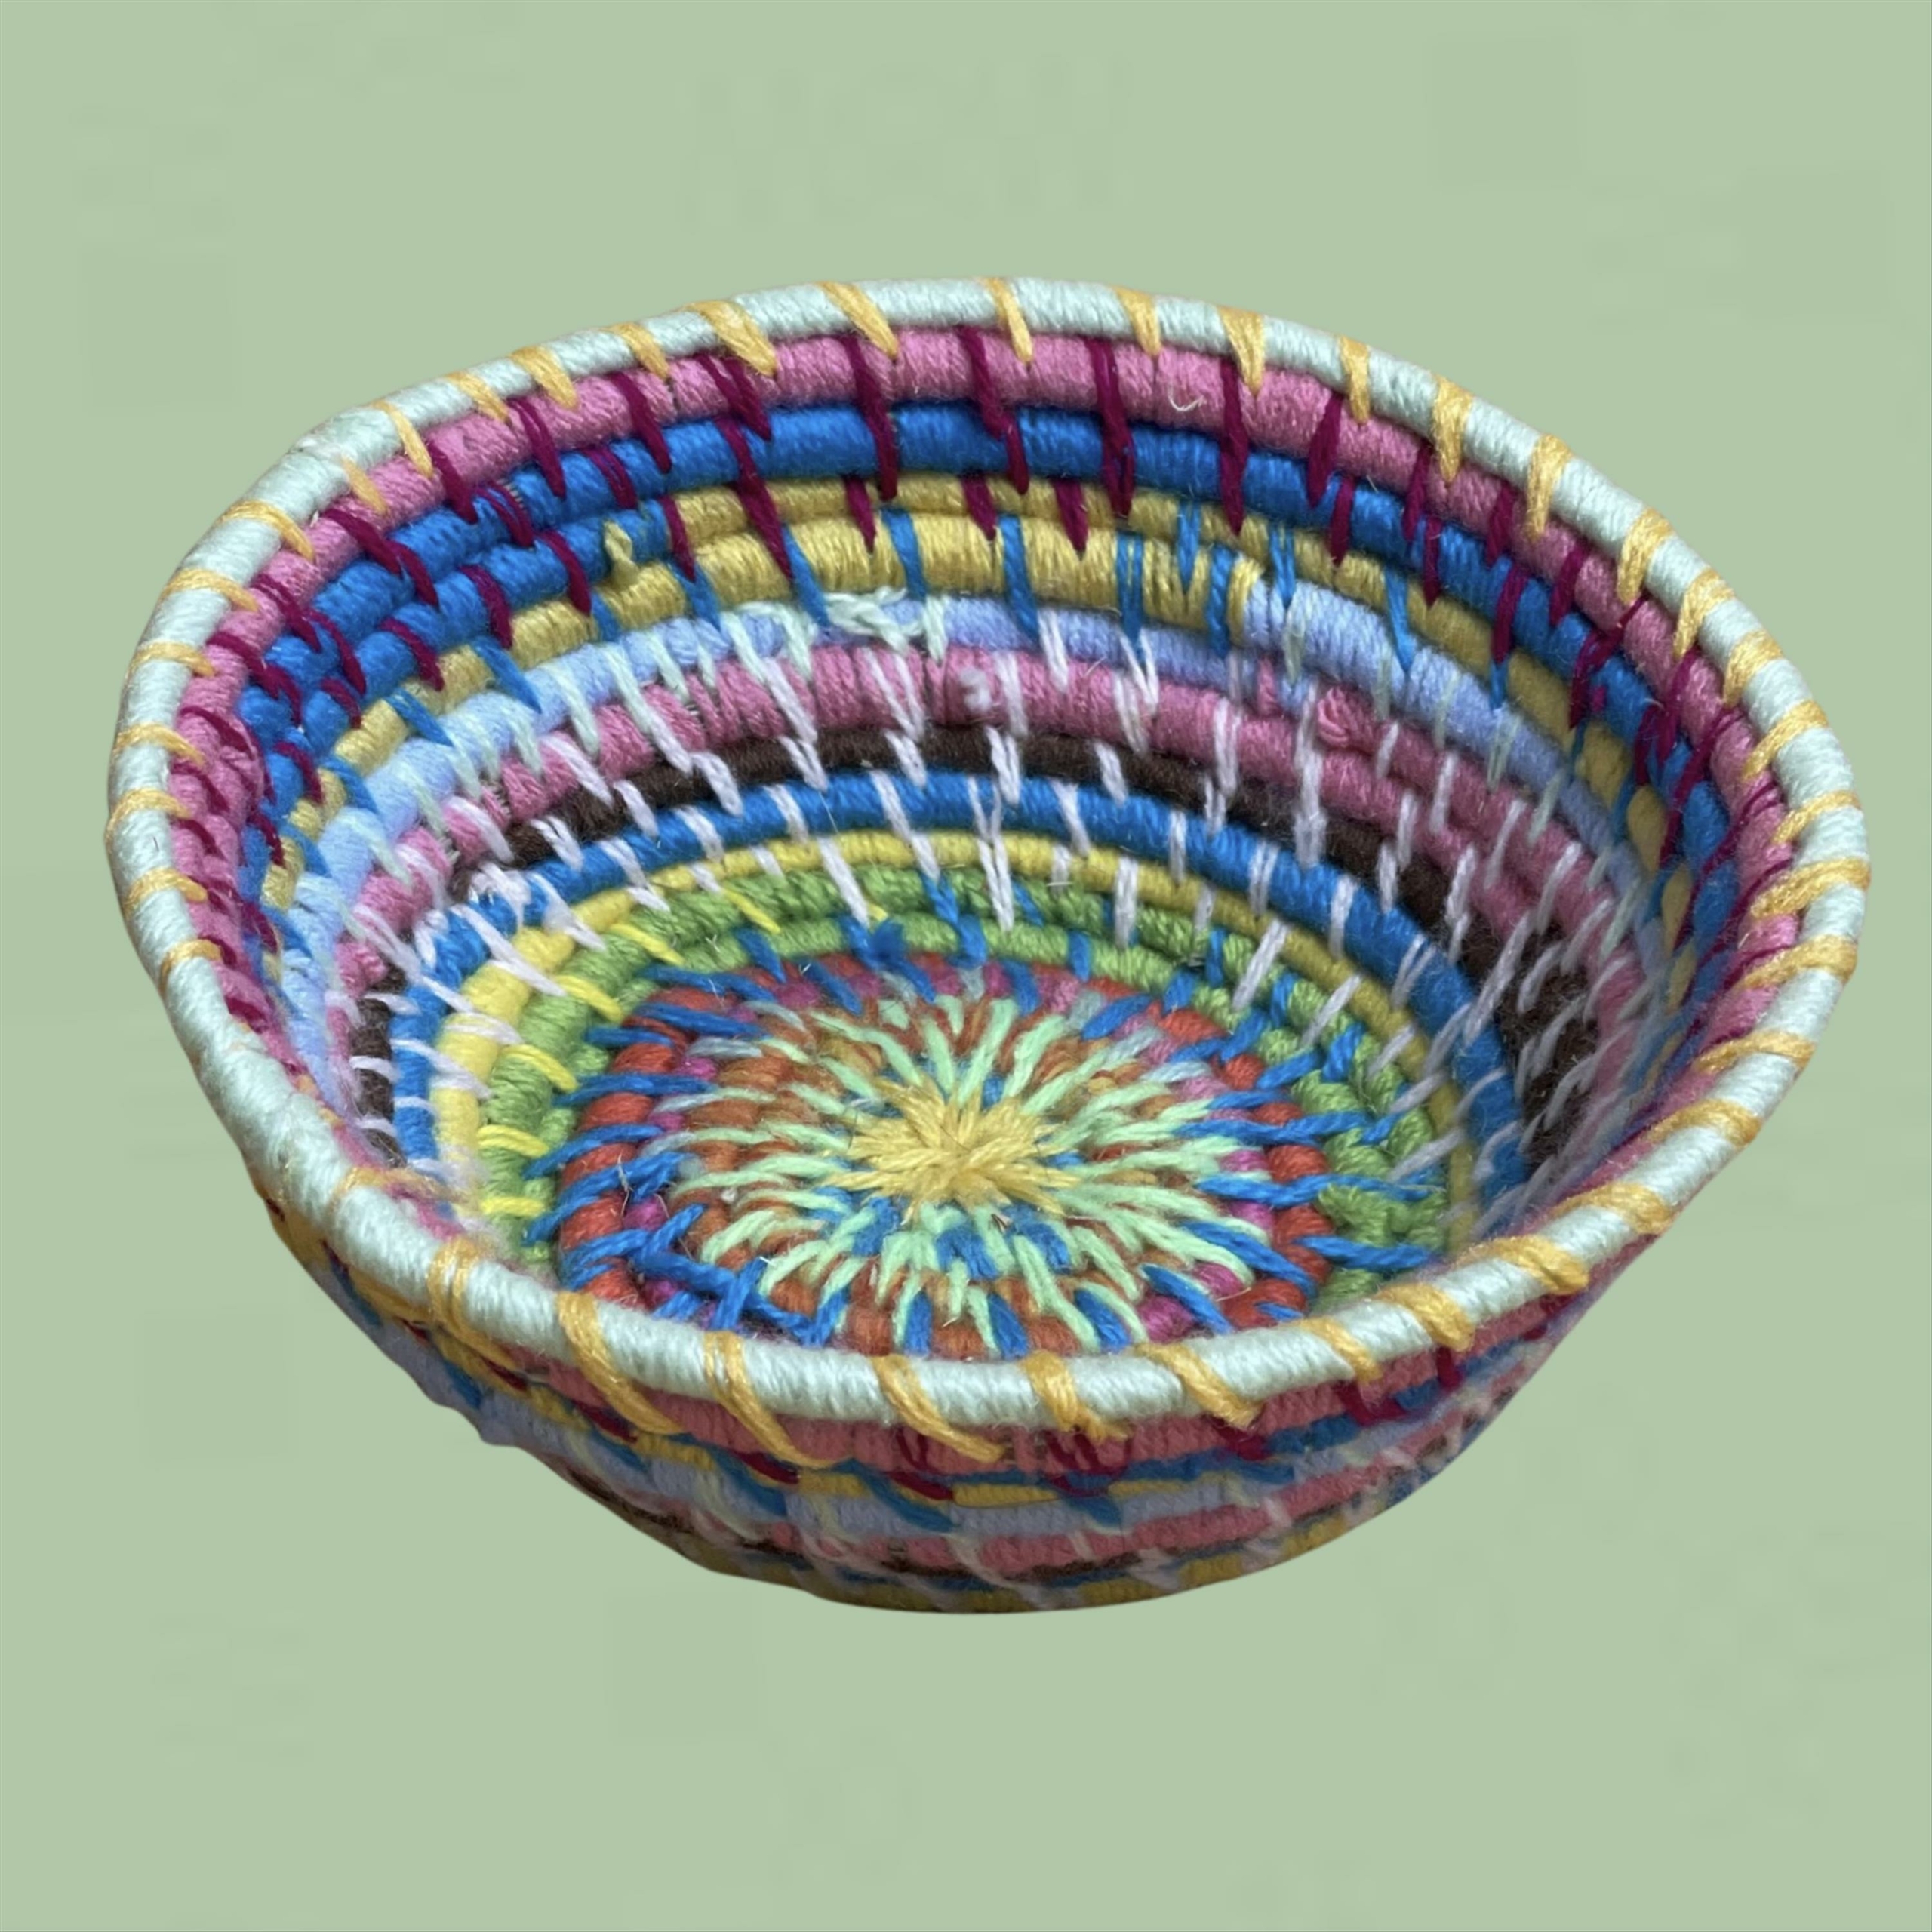 Colourful woven basket by Warruyanta artist Anne Ovi (324-22)